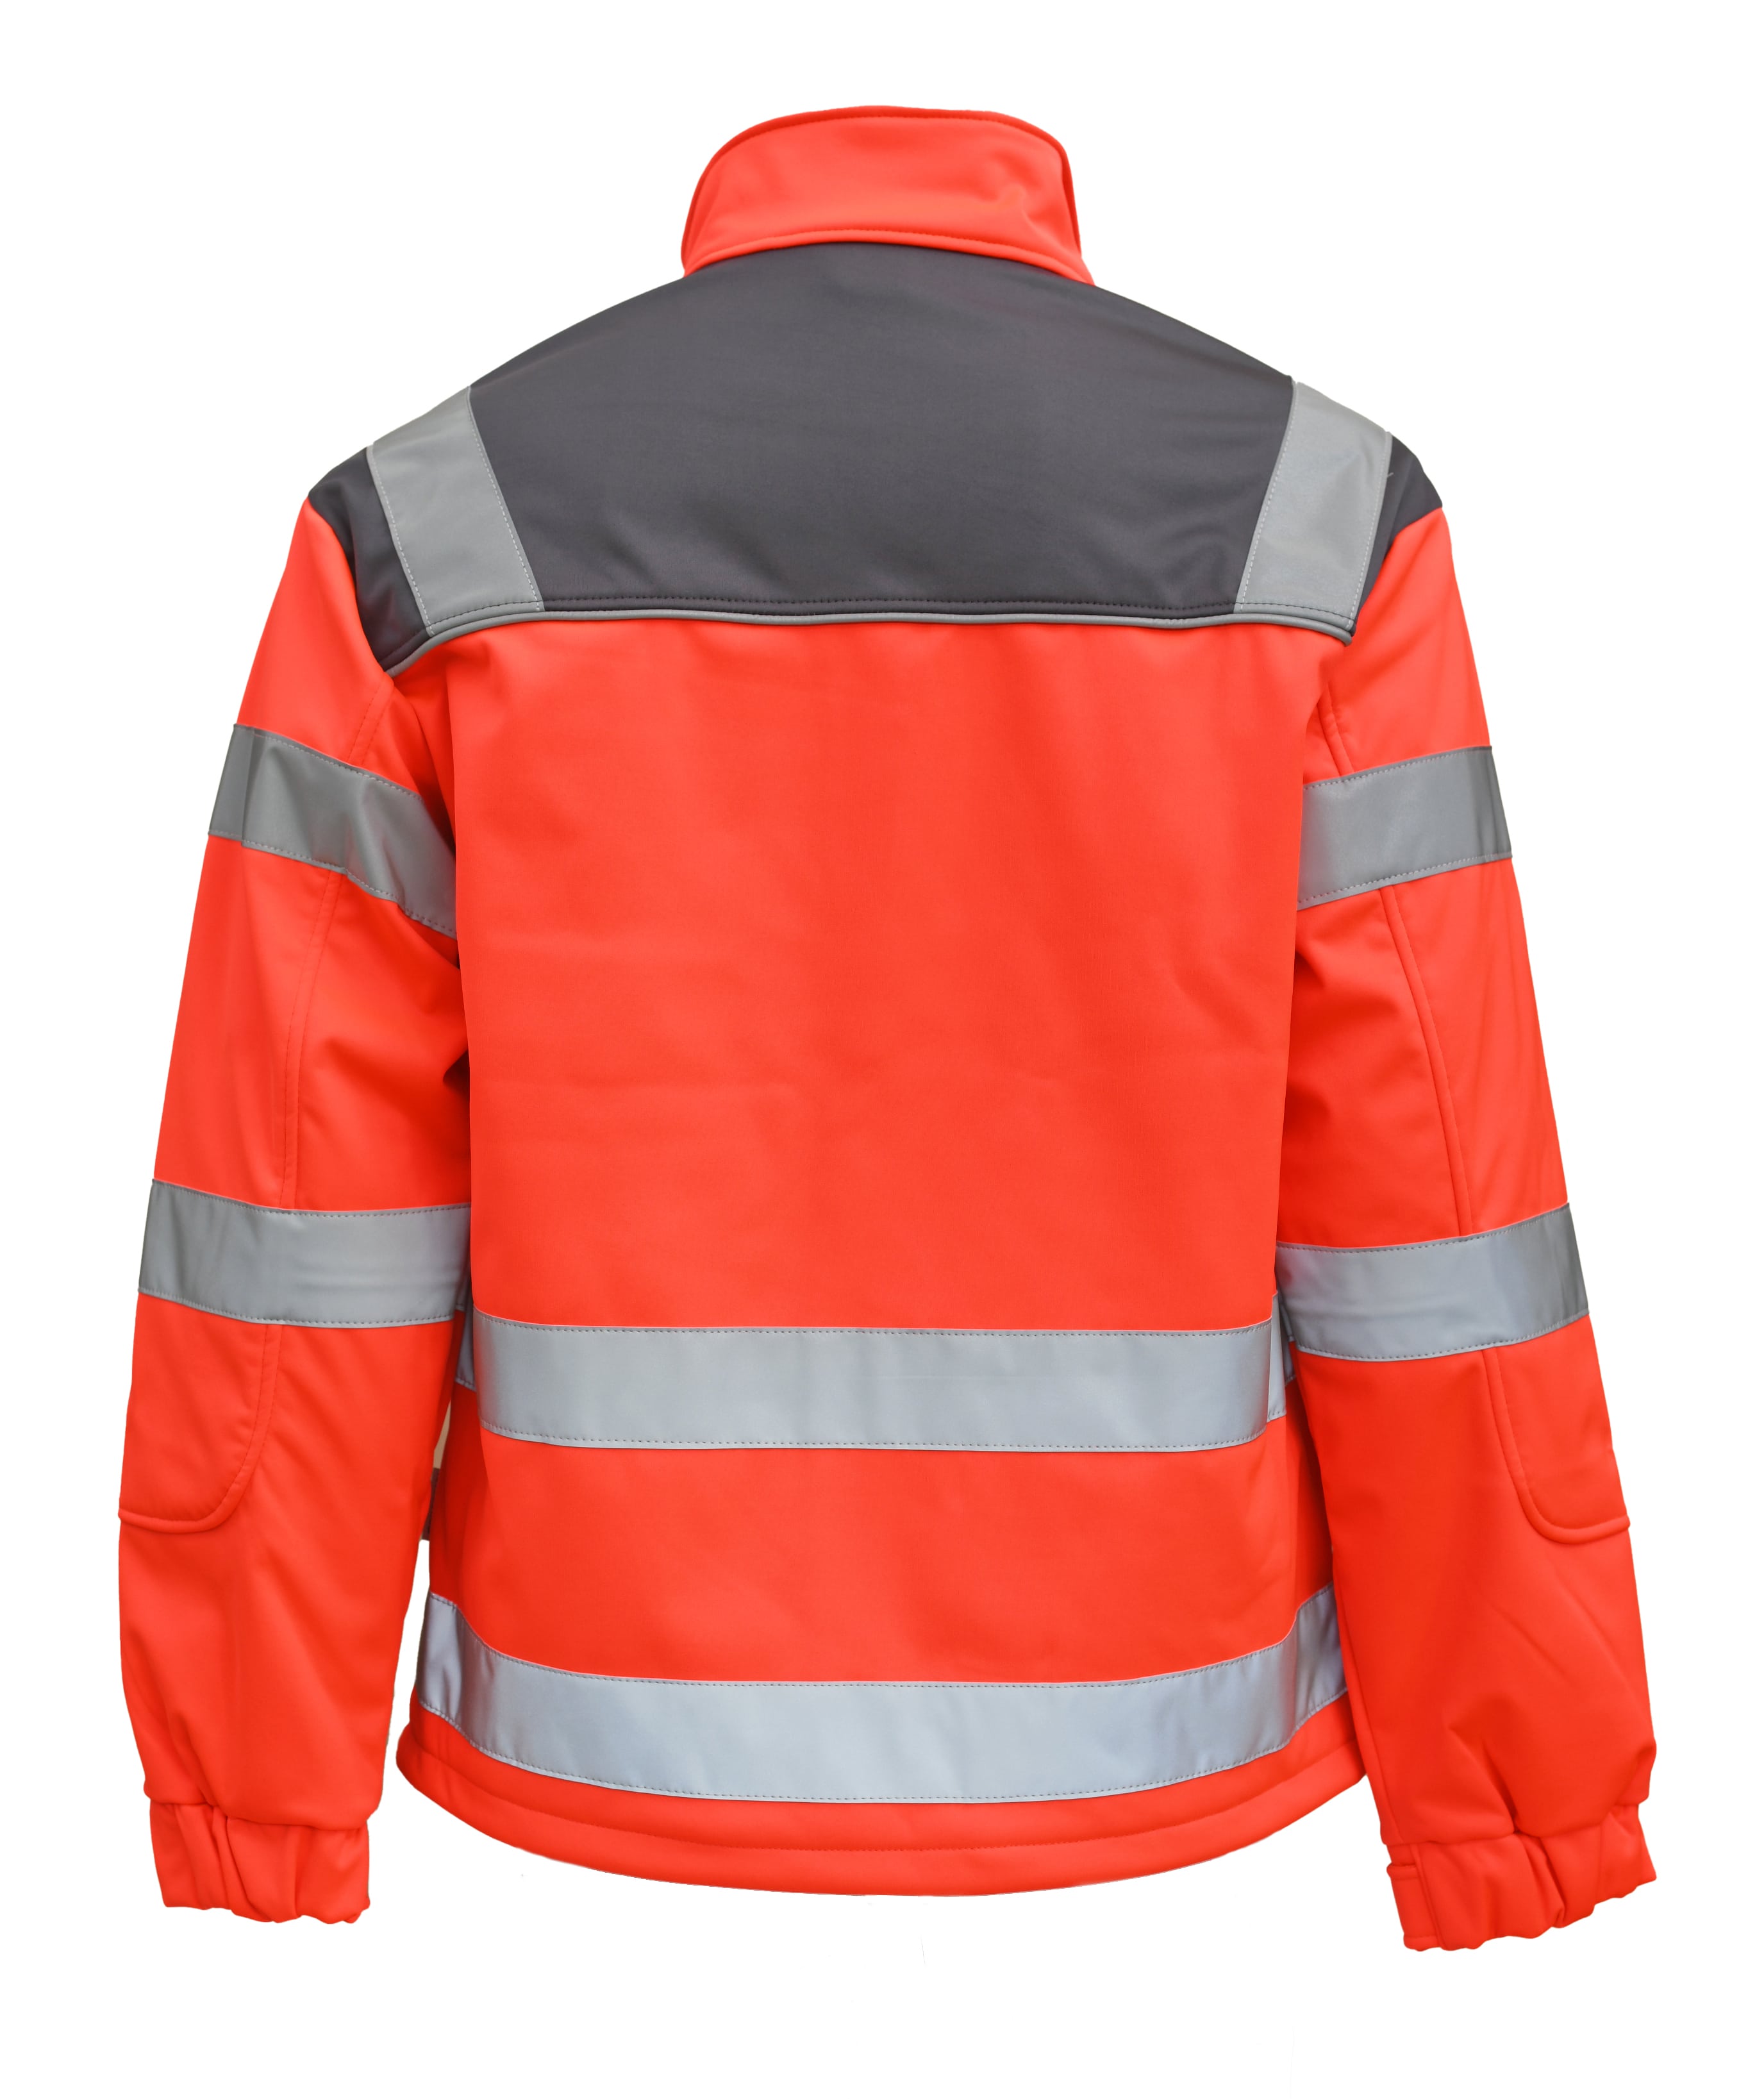 Rescuewear Softshelljacke Dynamic DRK HiVis DRK Neon Rot / Grau (Neu!!) - L